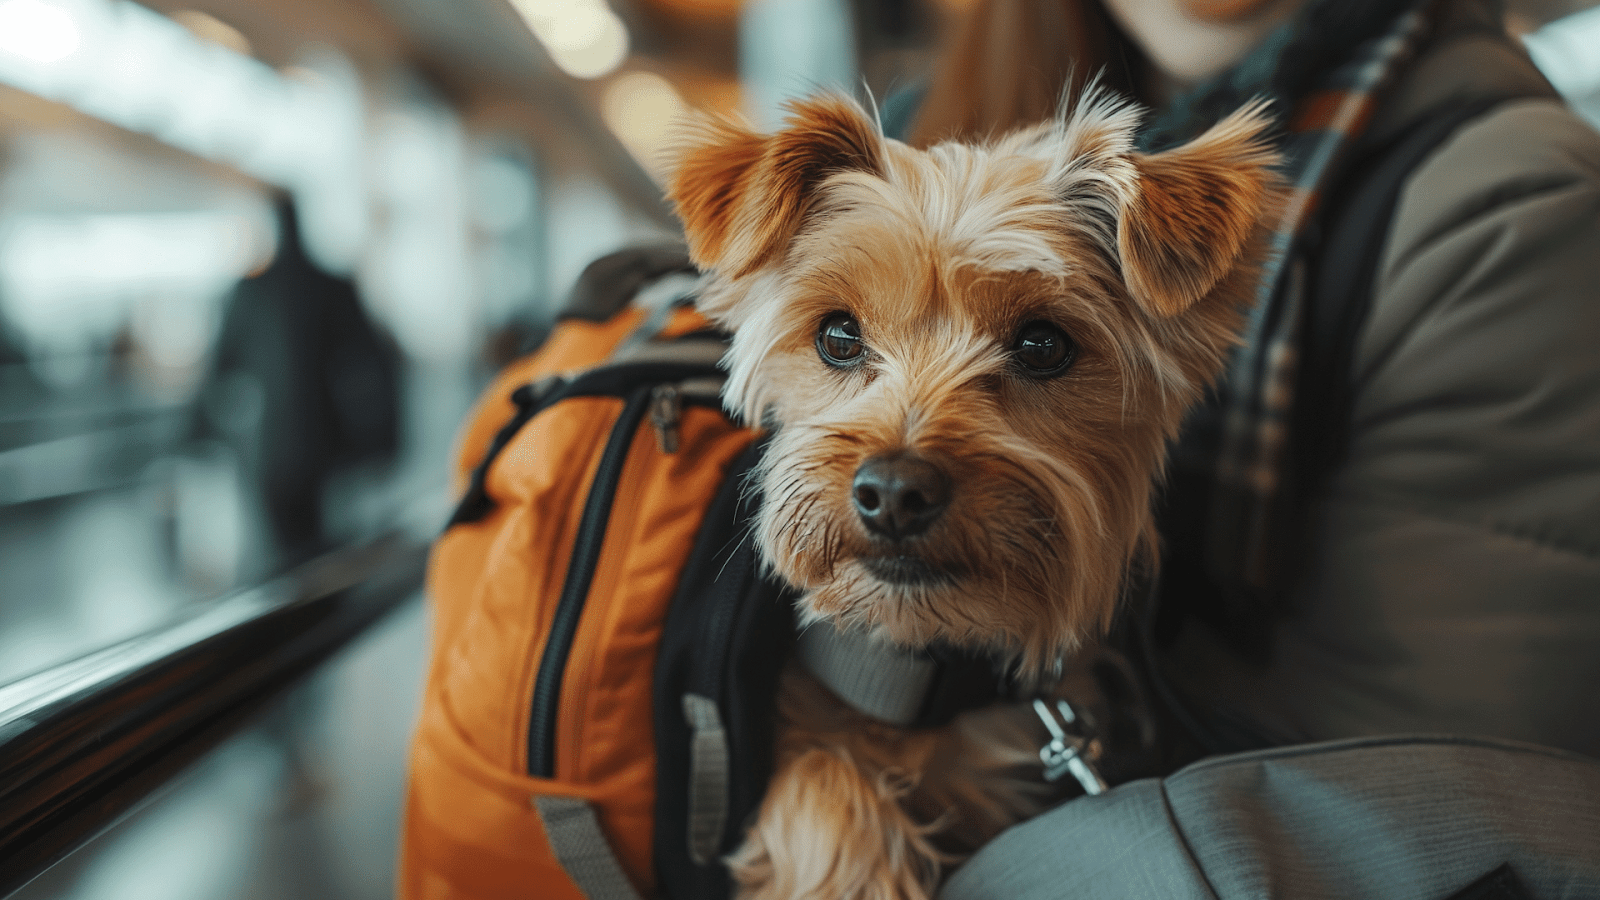 Dog peeking from an orange backpack